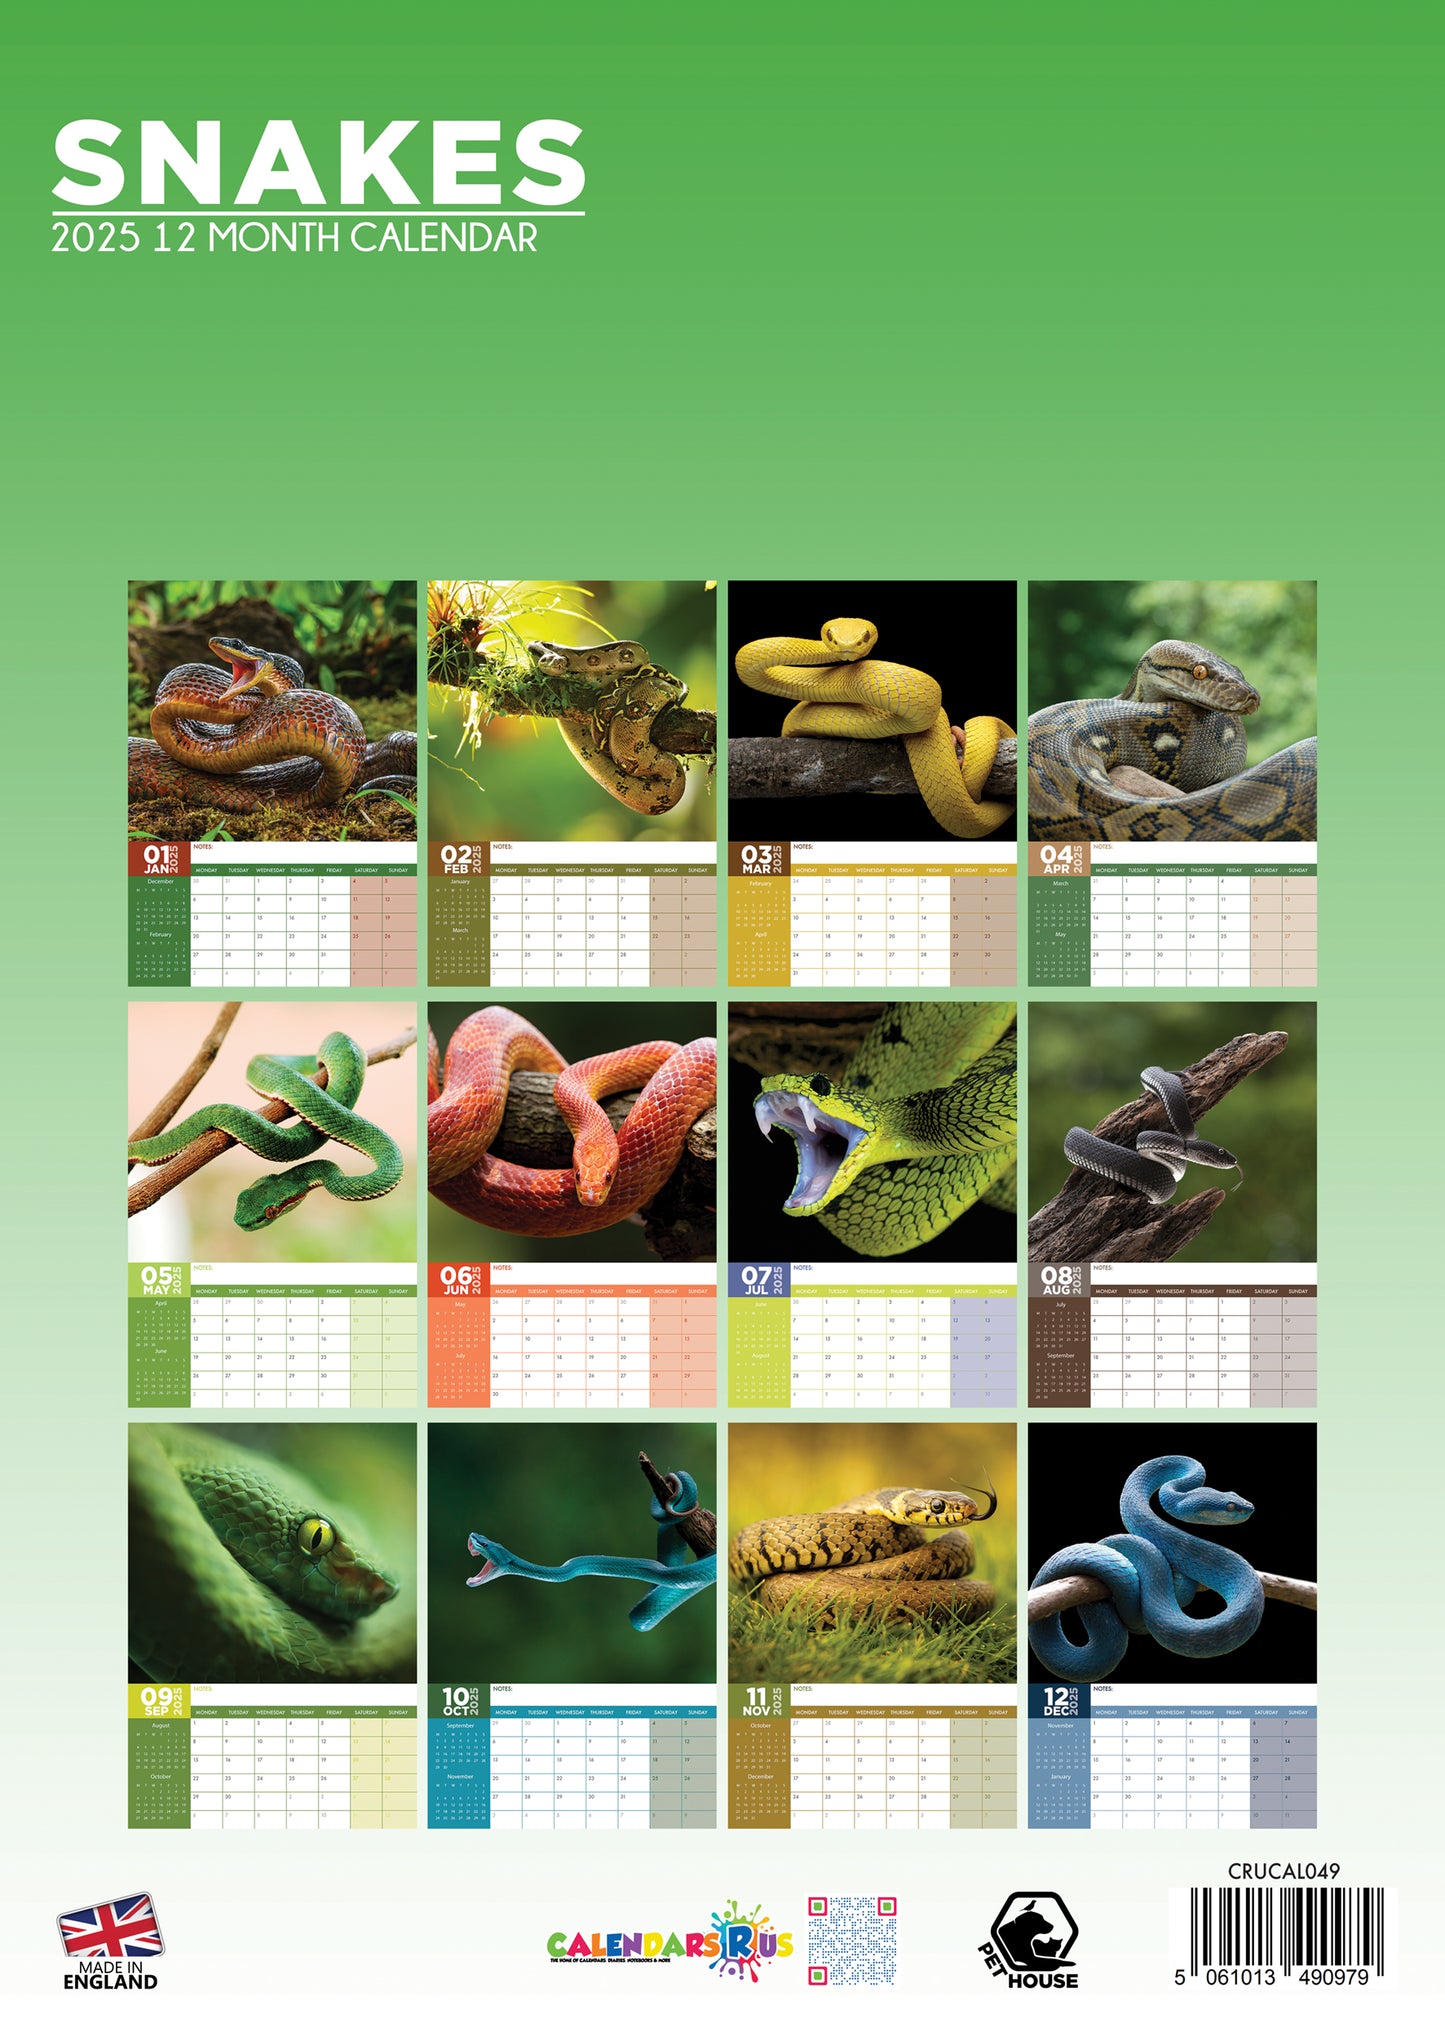 Snakes Calendar 2025